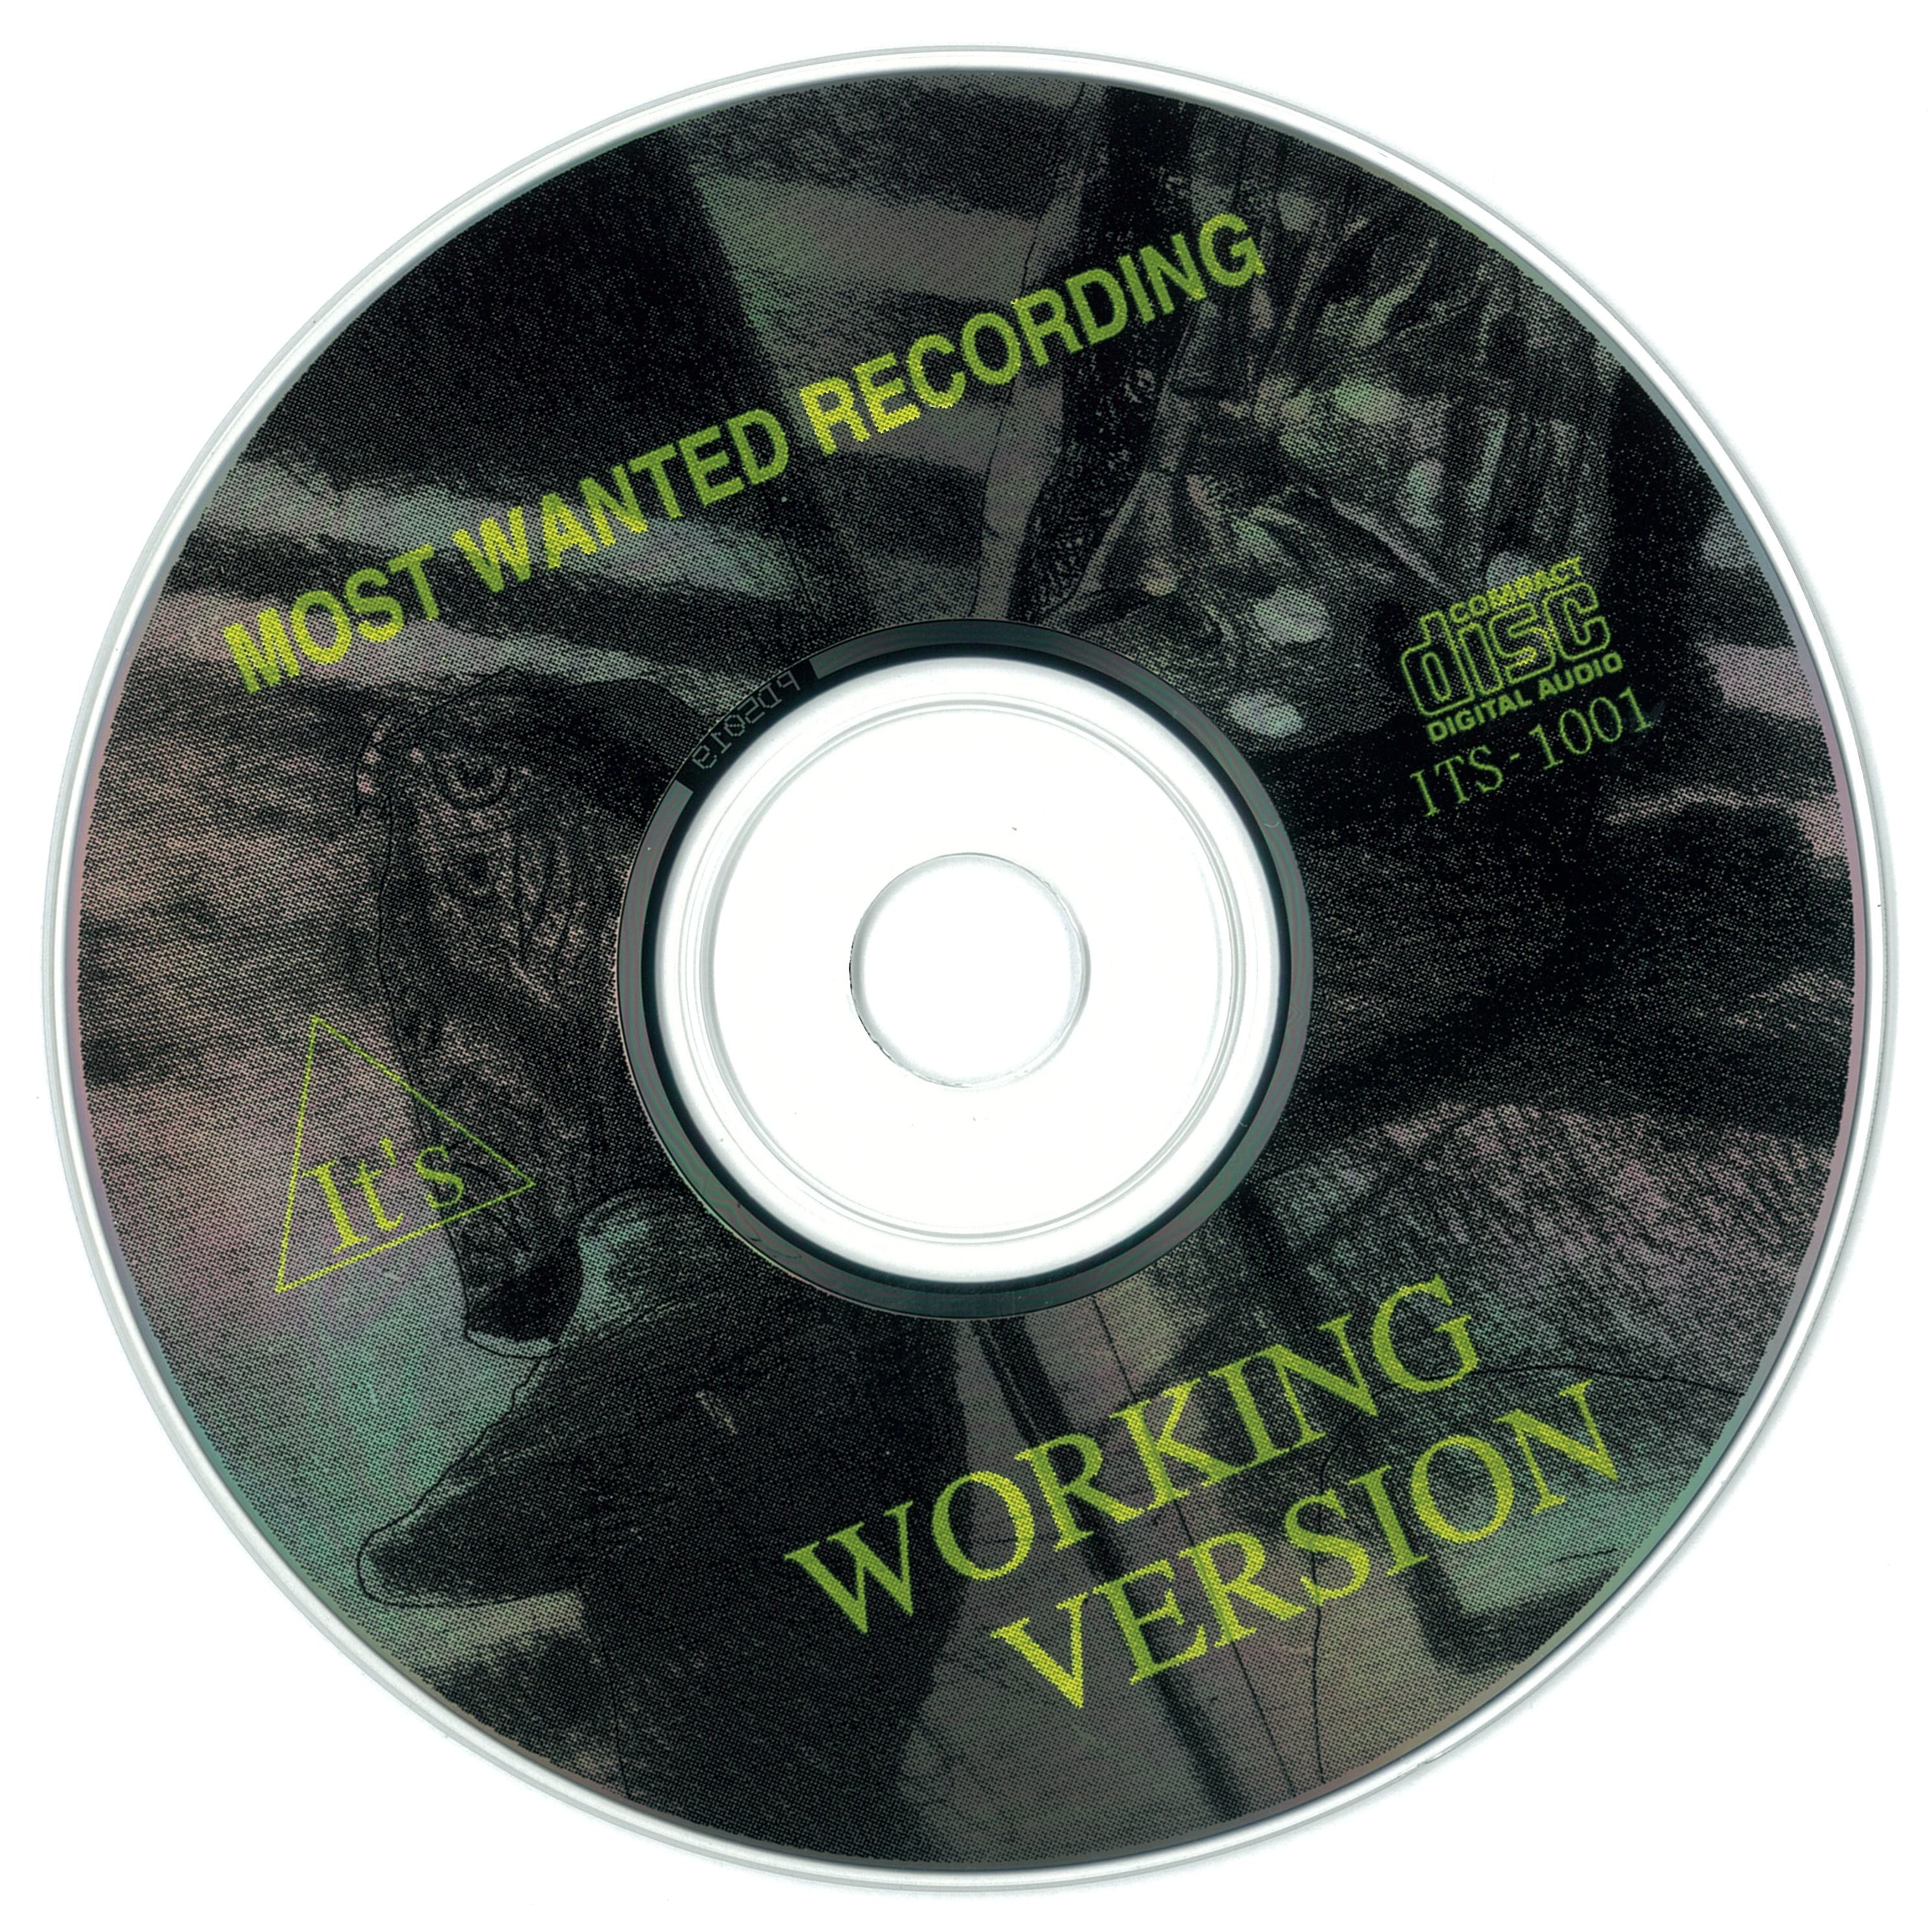 BeckBogertAppice1972-08Unreleased2ndAlbumWorkingVersion (2).JPG